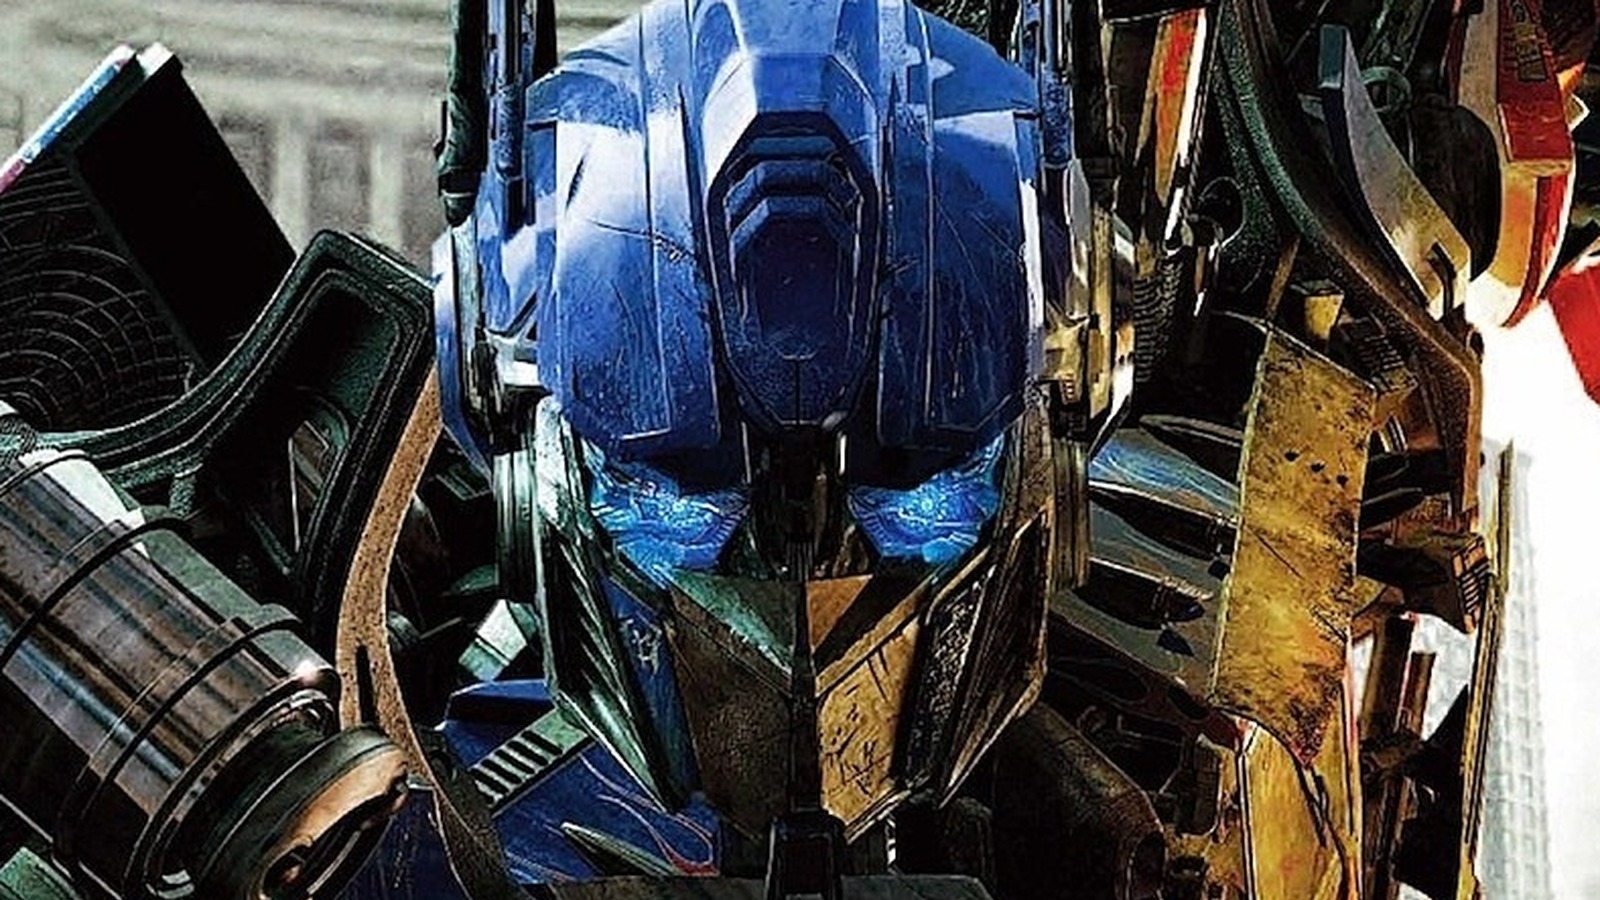 Transformers movies are one long Optimus Prime villain origin